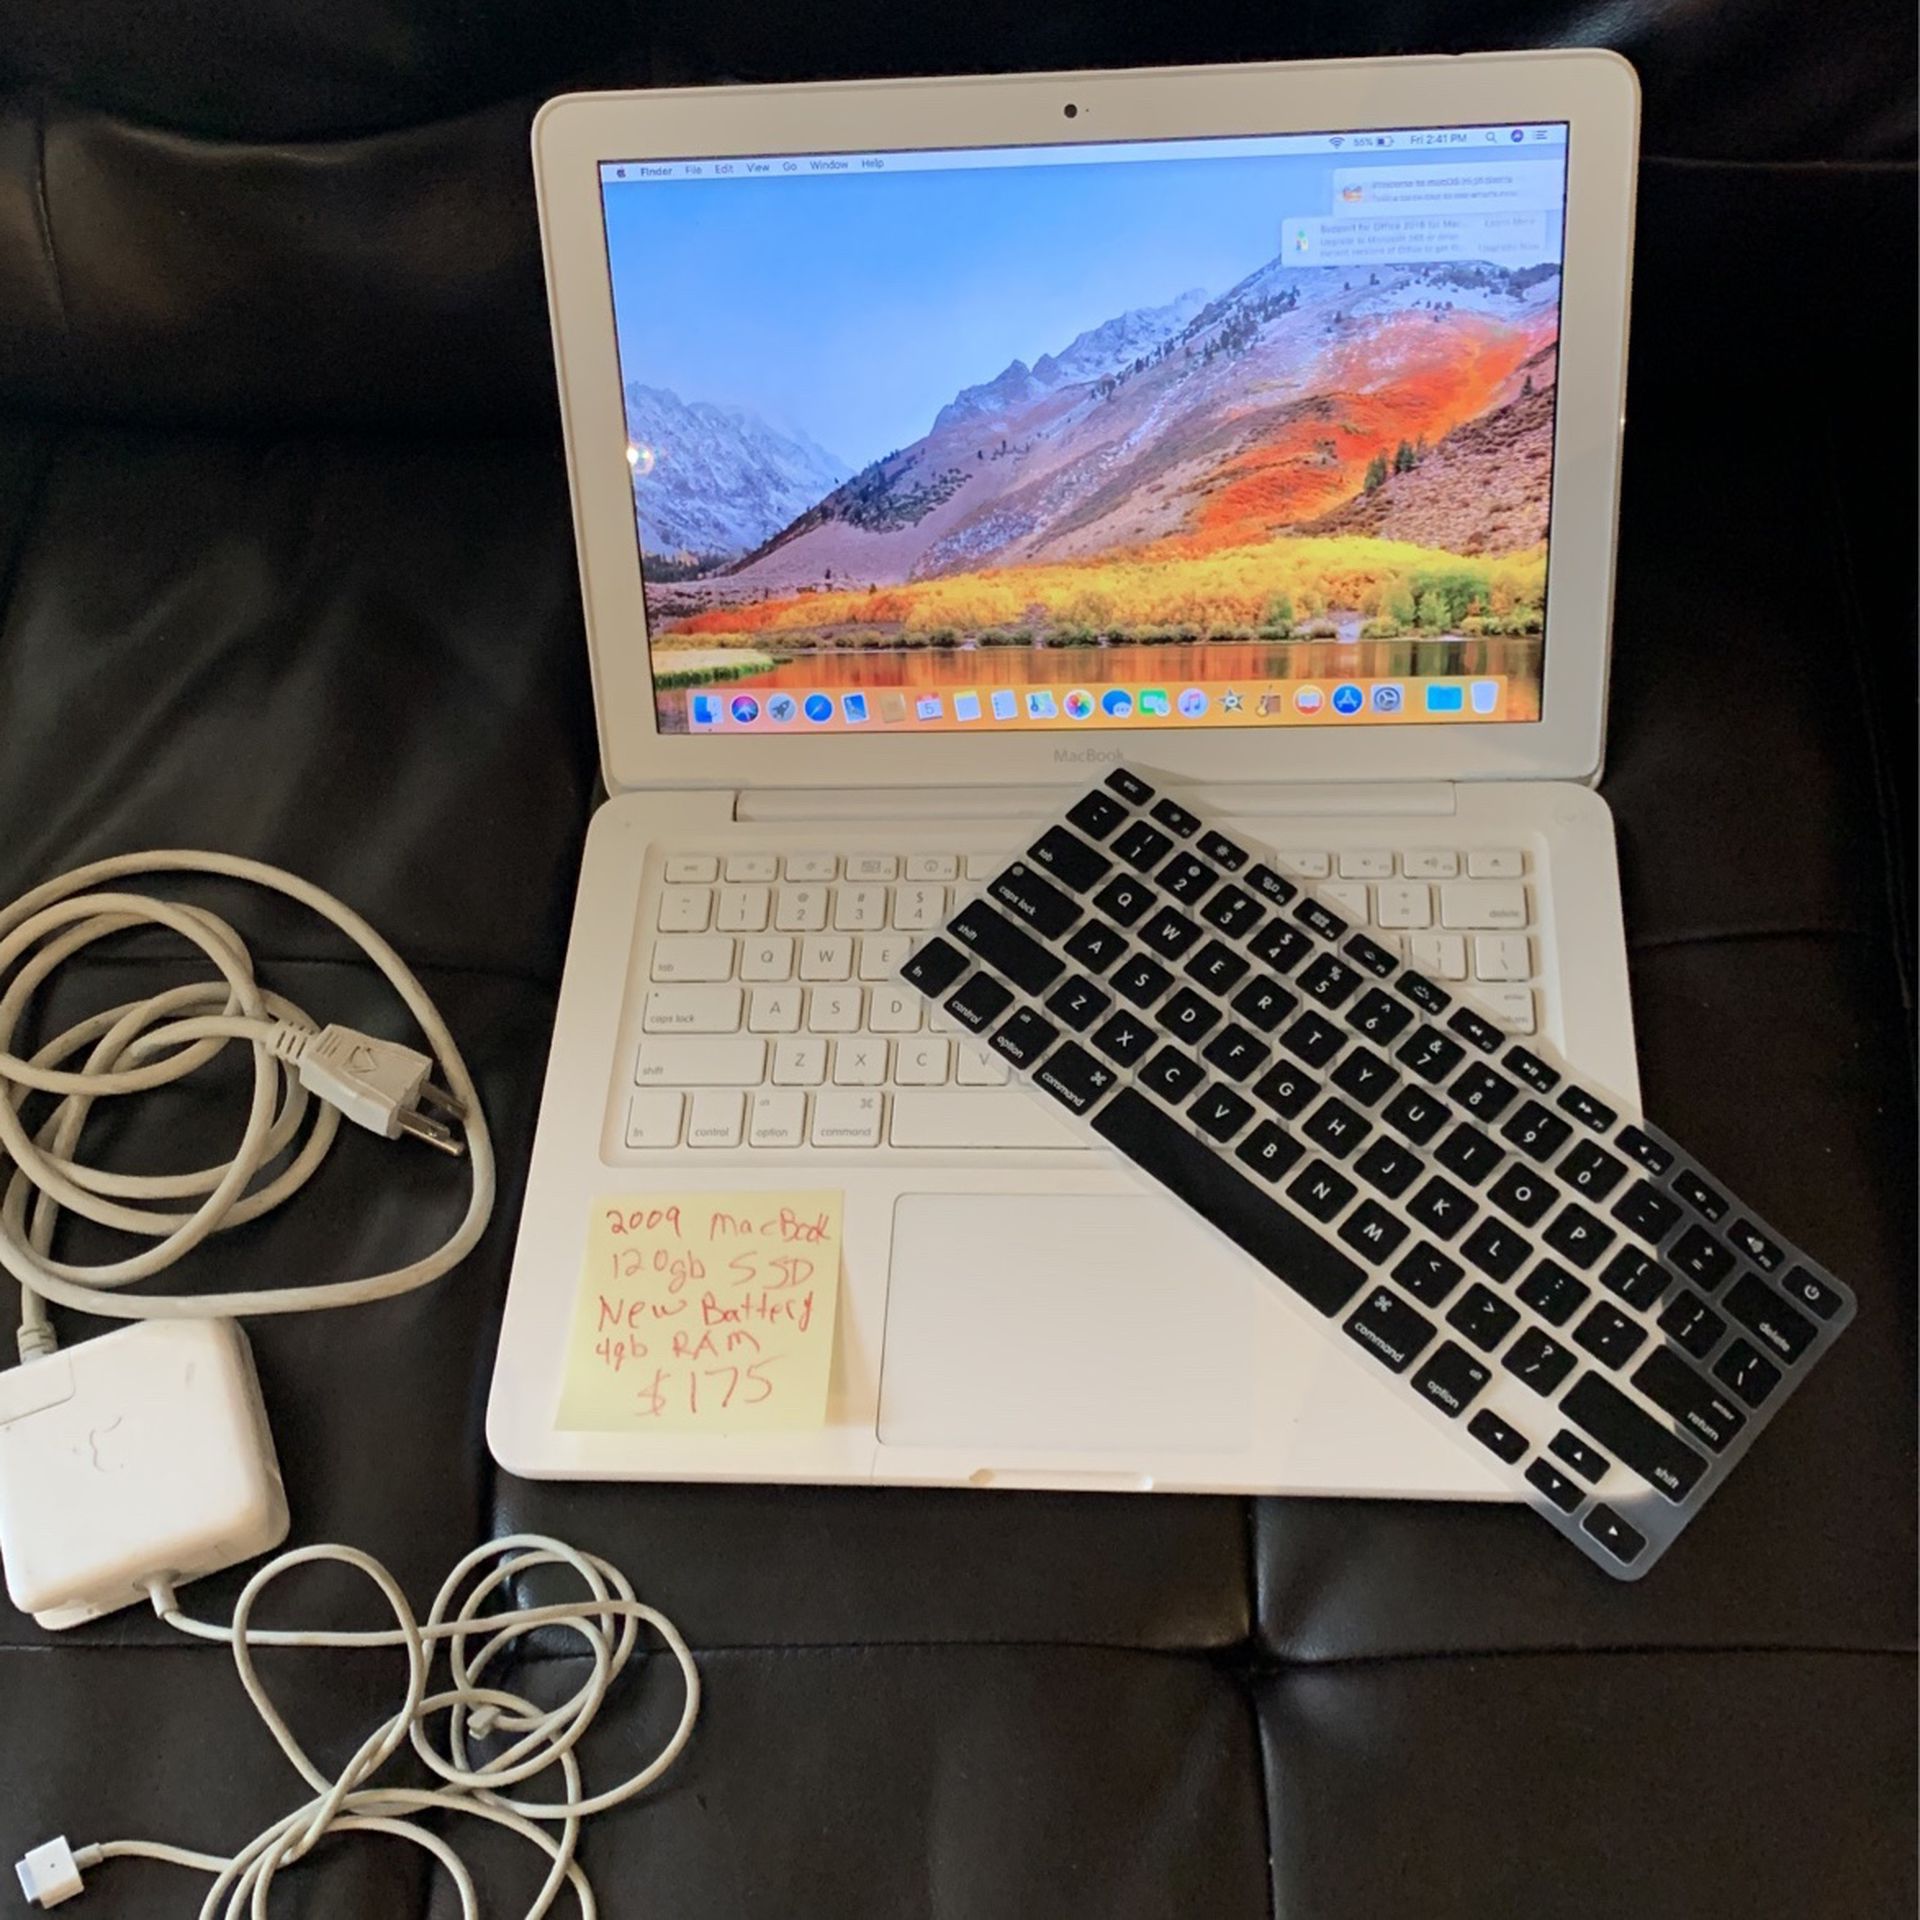 Apple MacBook-120gb SSD-new Battery